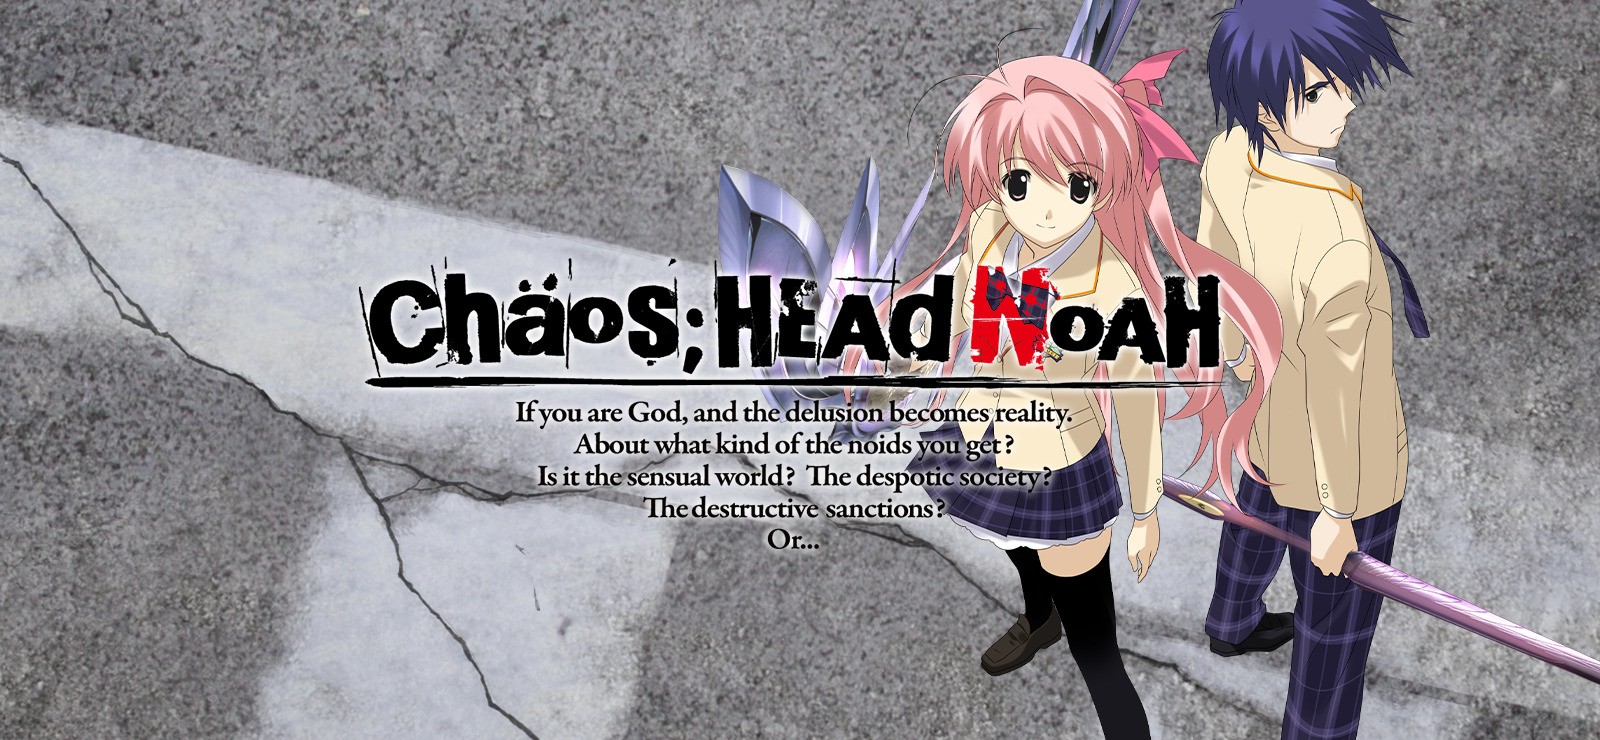 Chaos head noah in steam фото 10